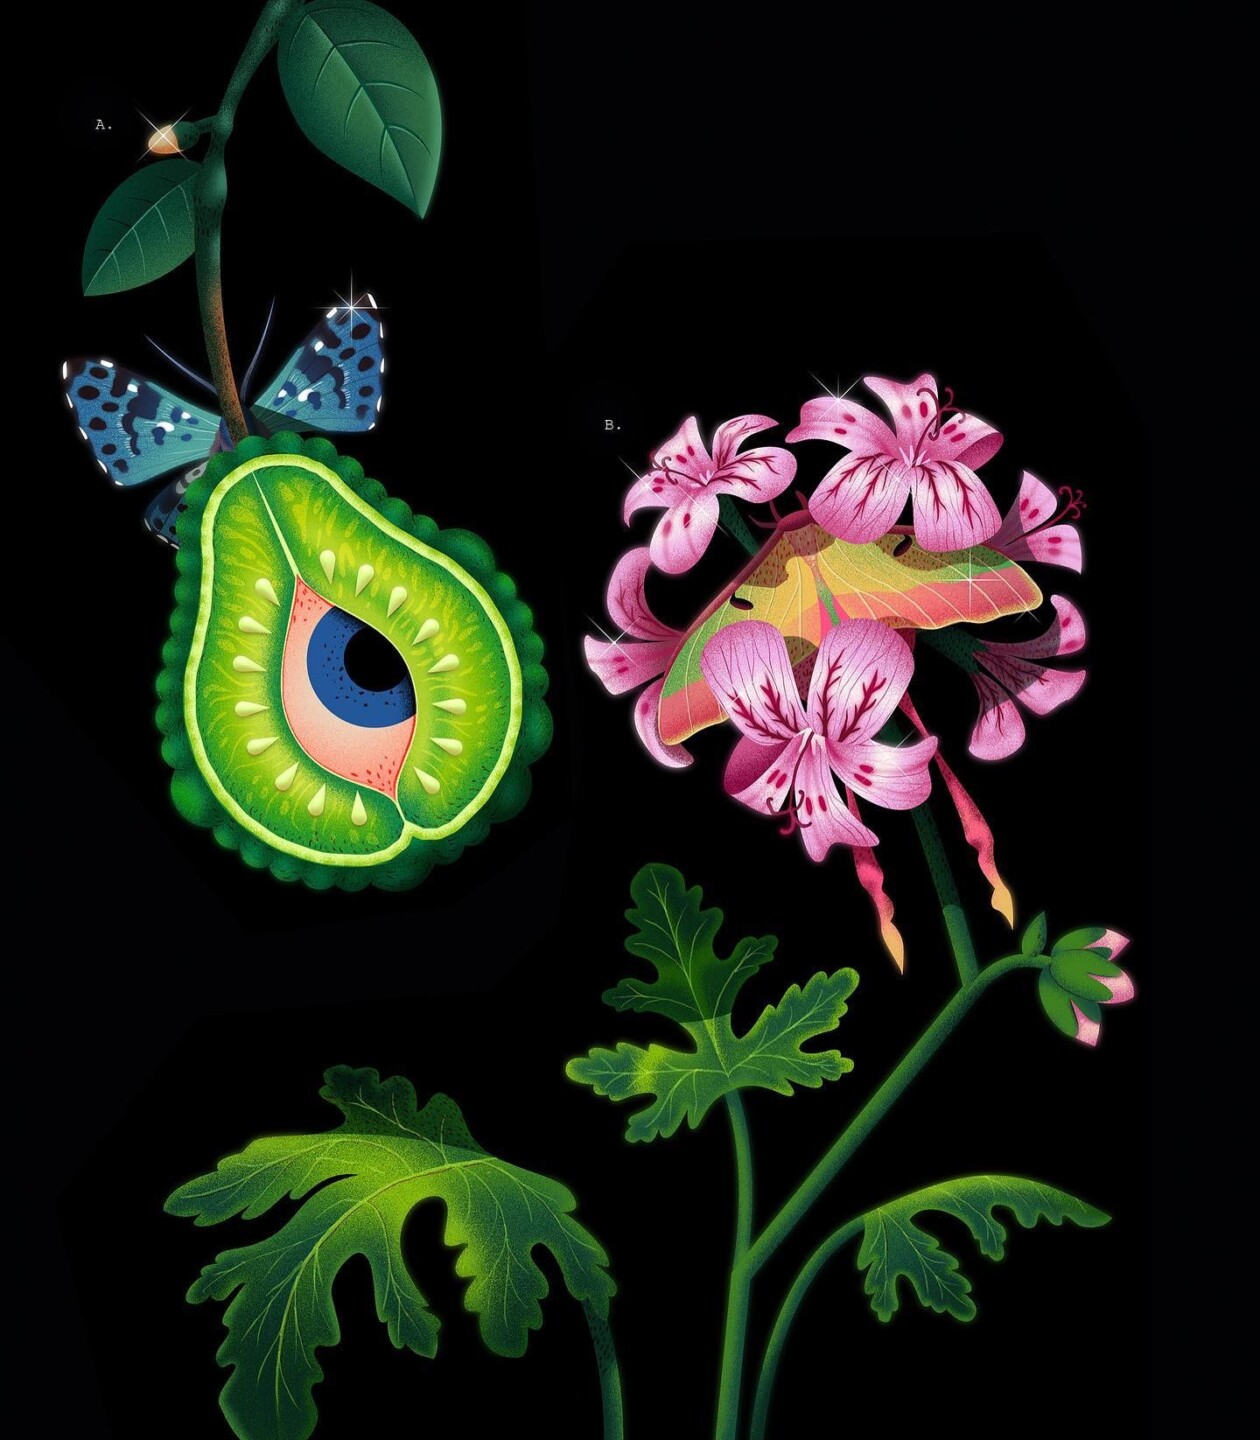 Marvelous Surrealistic Illustrations Of Eyes Peering From Plants And Animals By Ana Miminoshvili (8)